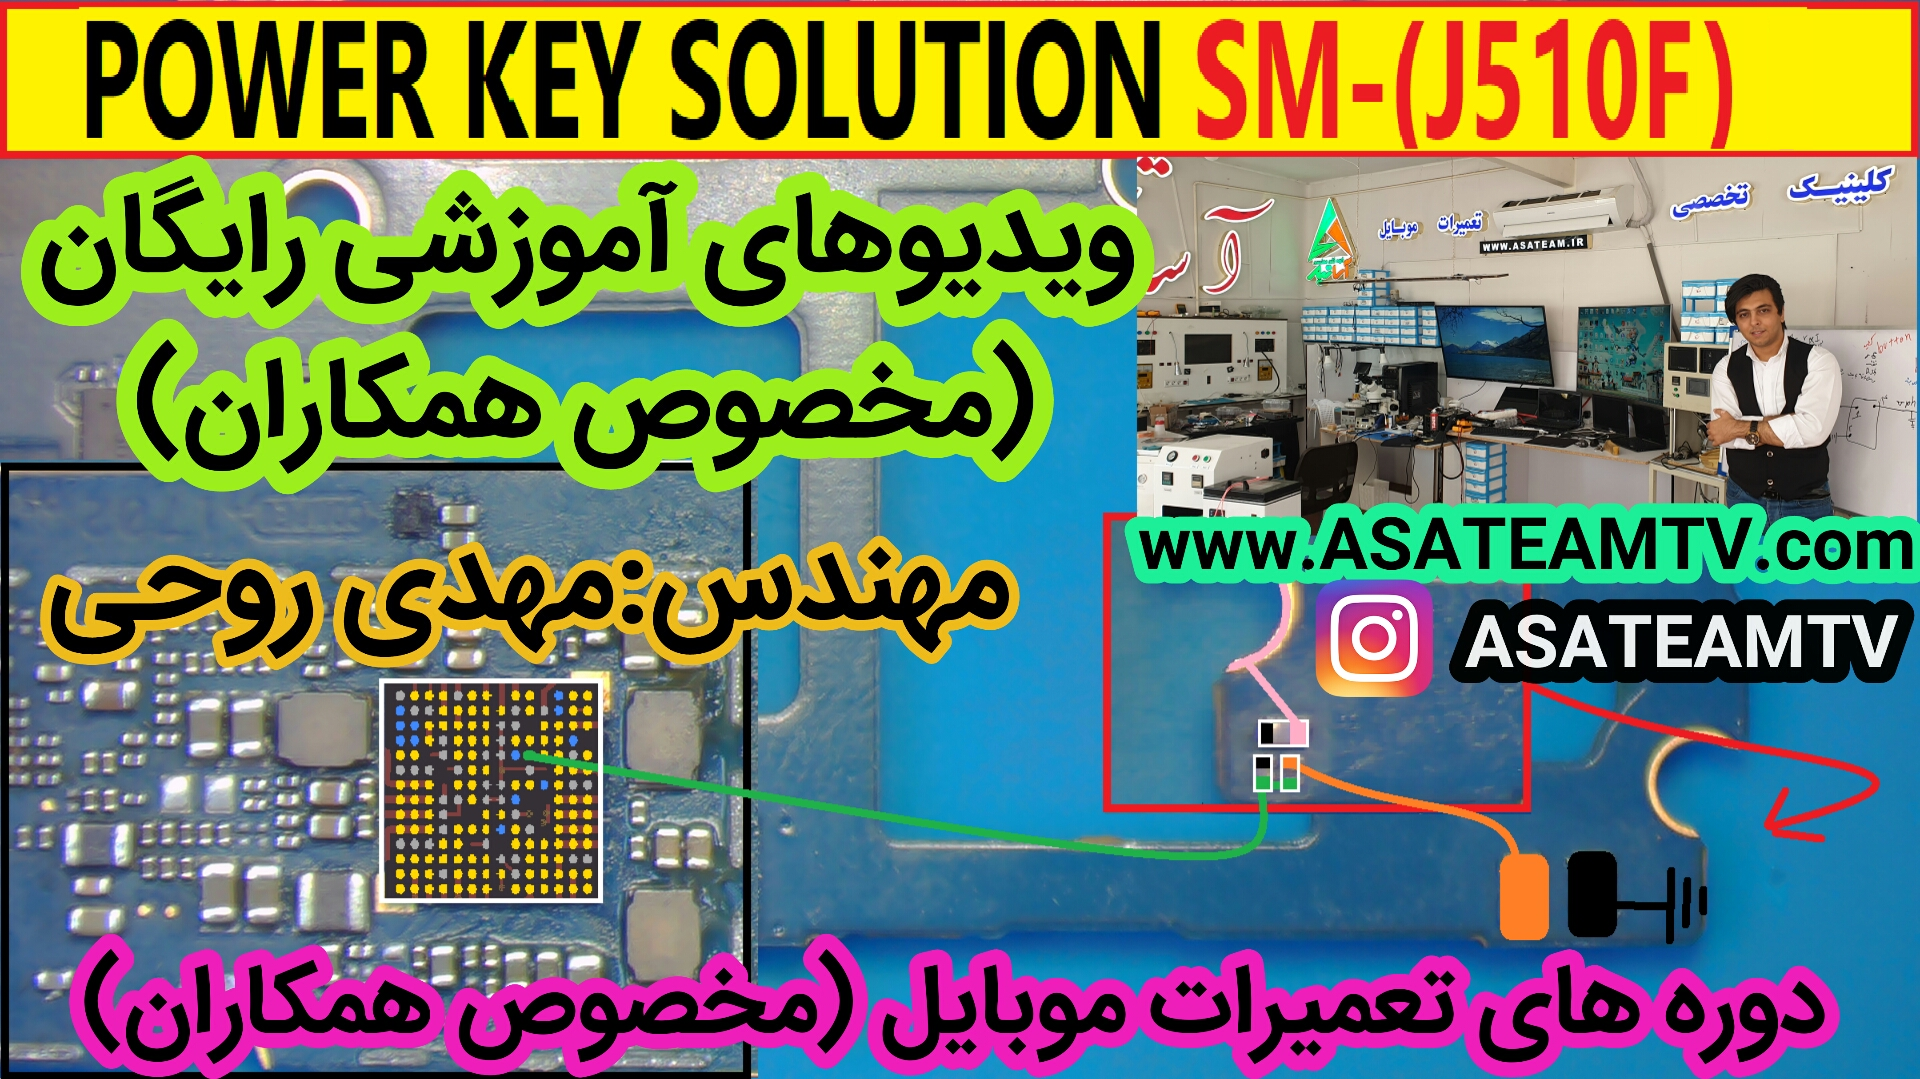 solution power key j510f